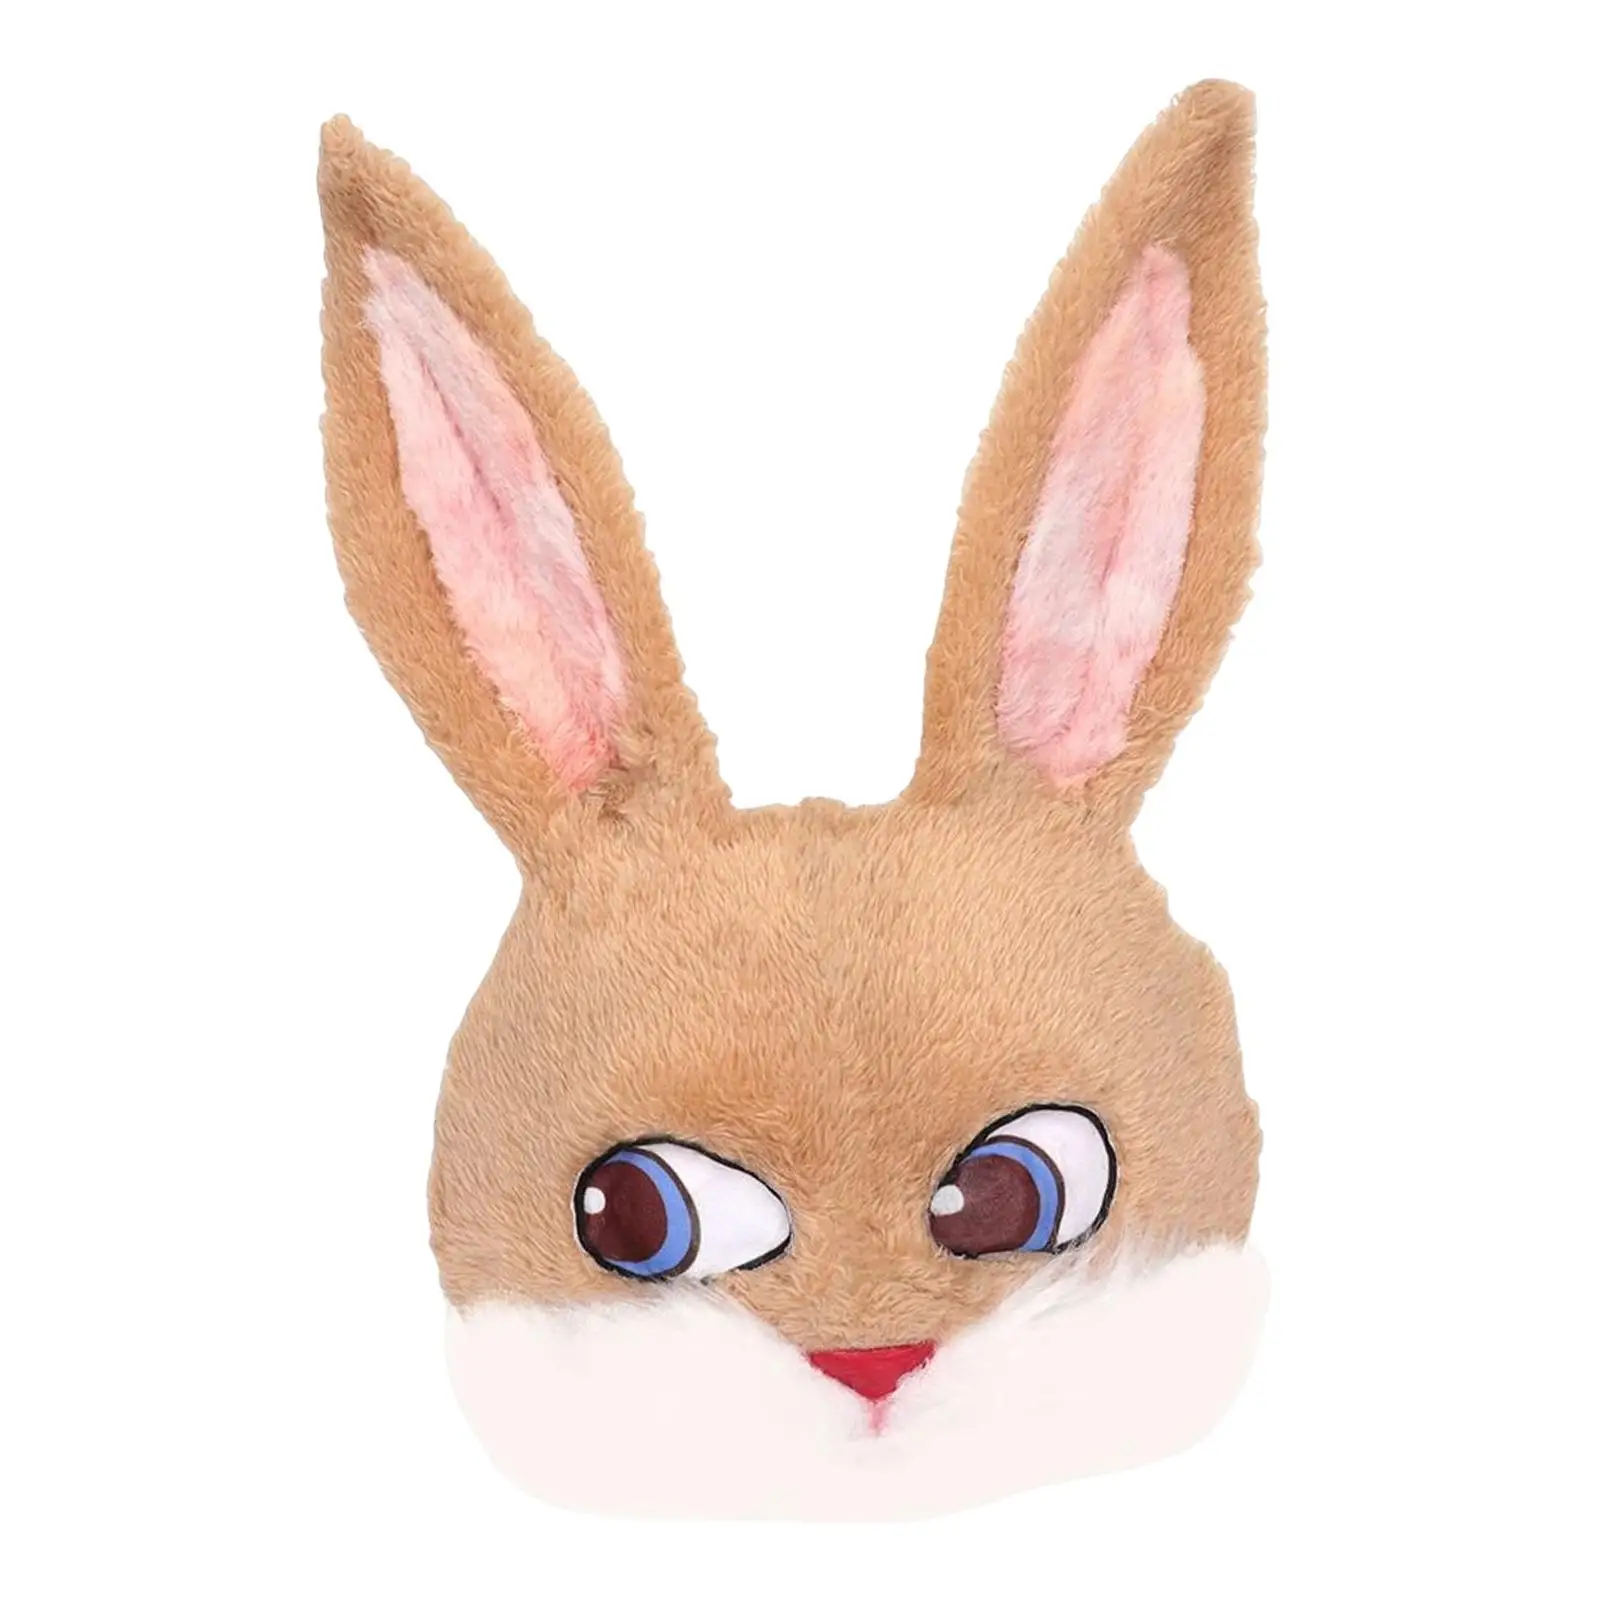 3D Rabbit Masks Headgear Decor Animal Bunny Masks for Easter Party Cosplay